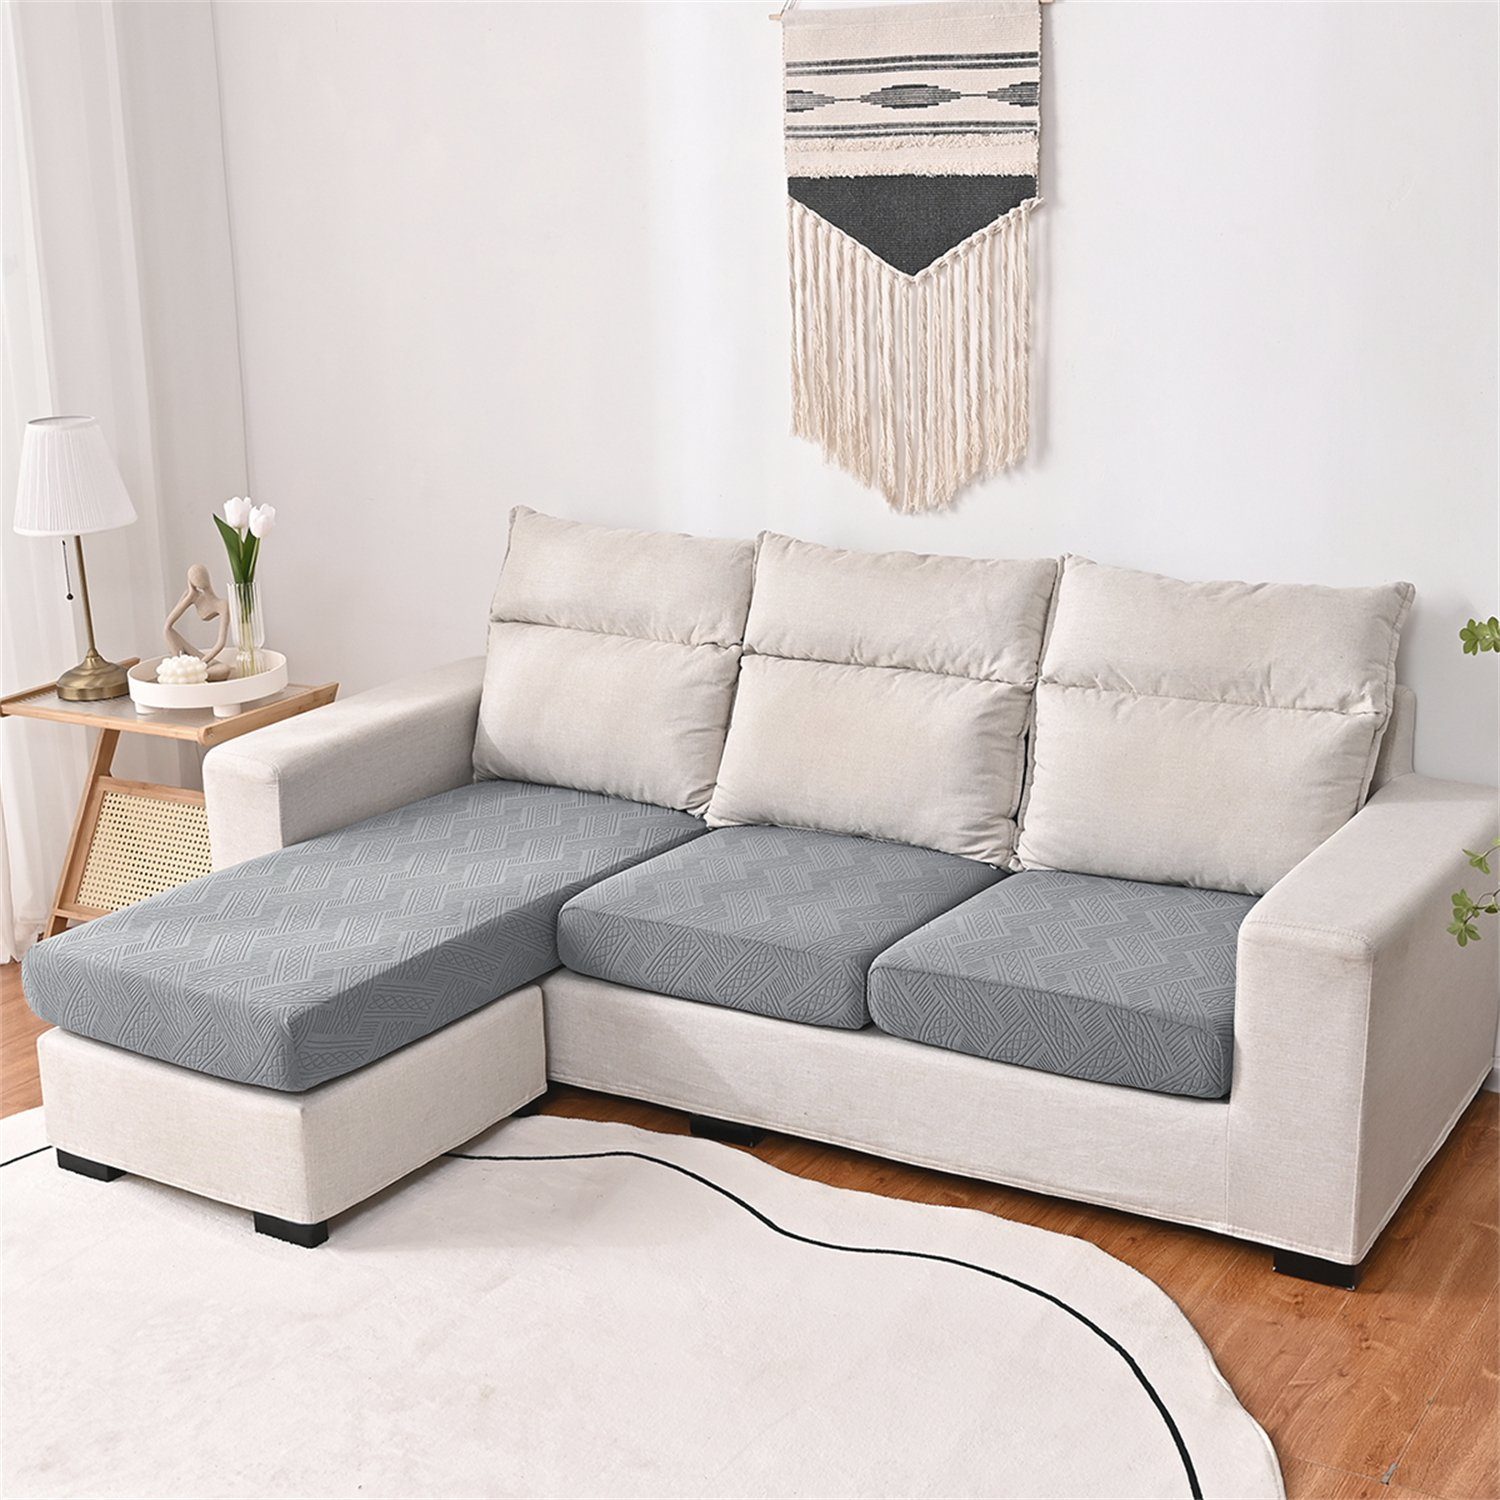 Sofahusse, HOMEIDEAS, Sofa Bezüge Couch Kissenbezüge für 1,2,3,4 Sitze Grau-Geometrie